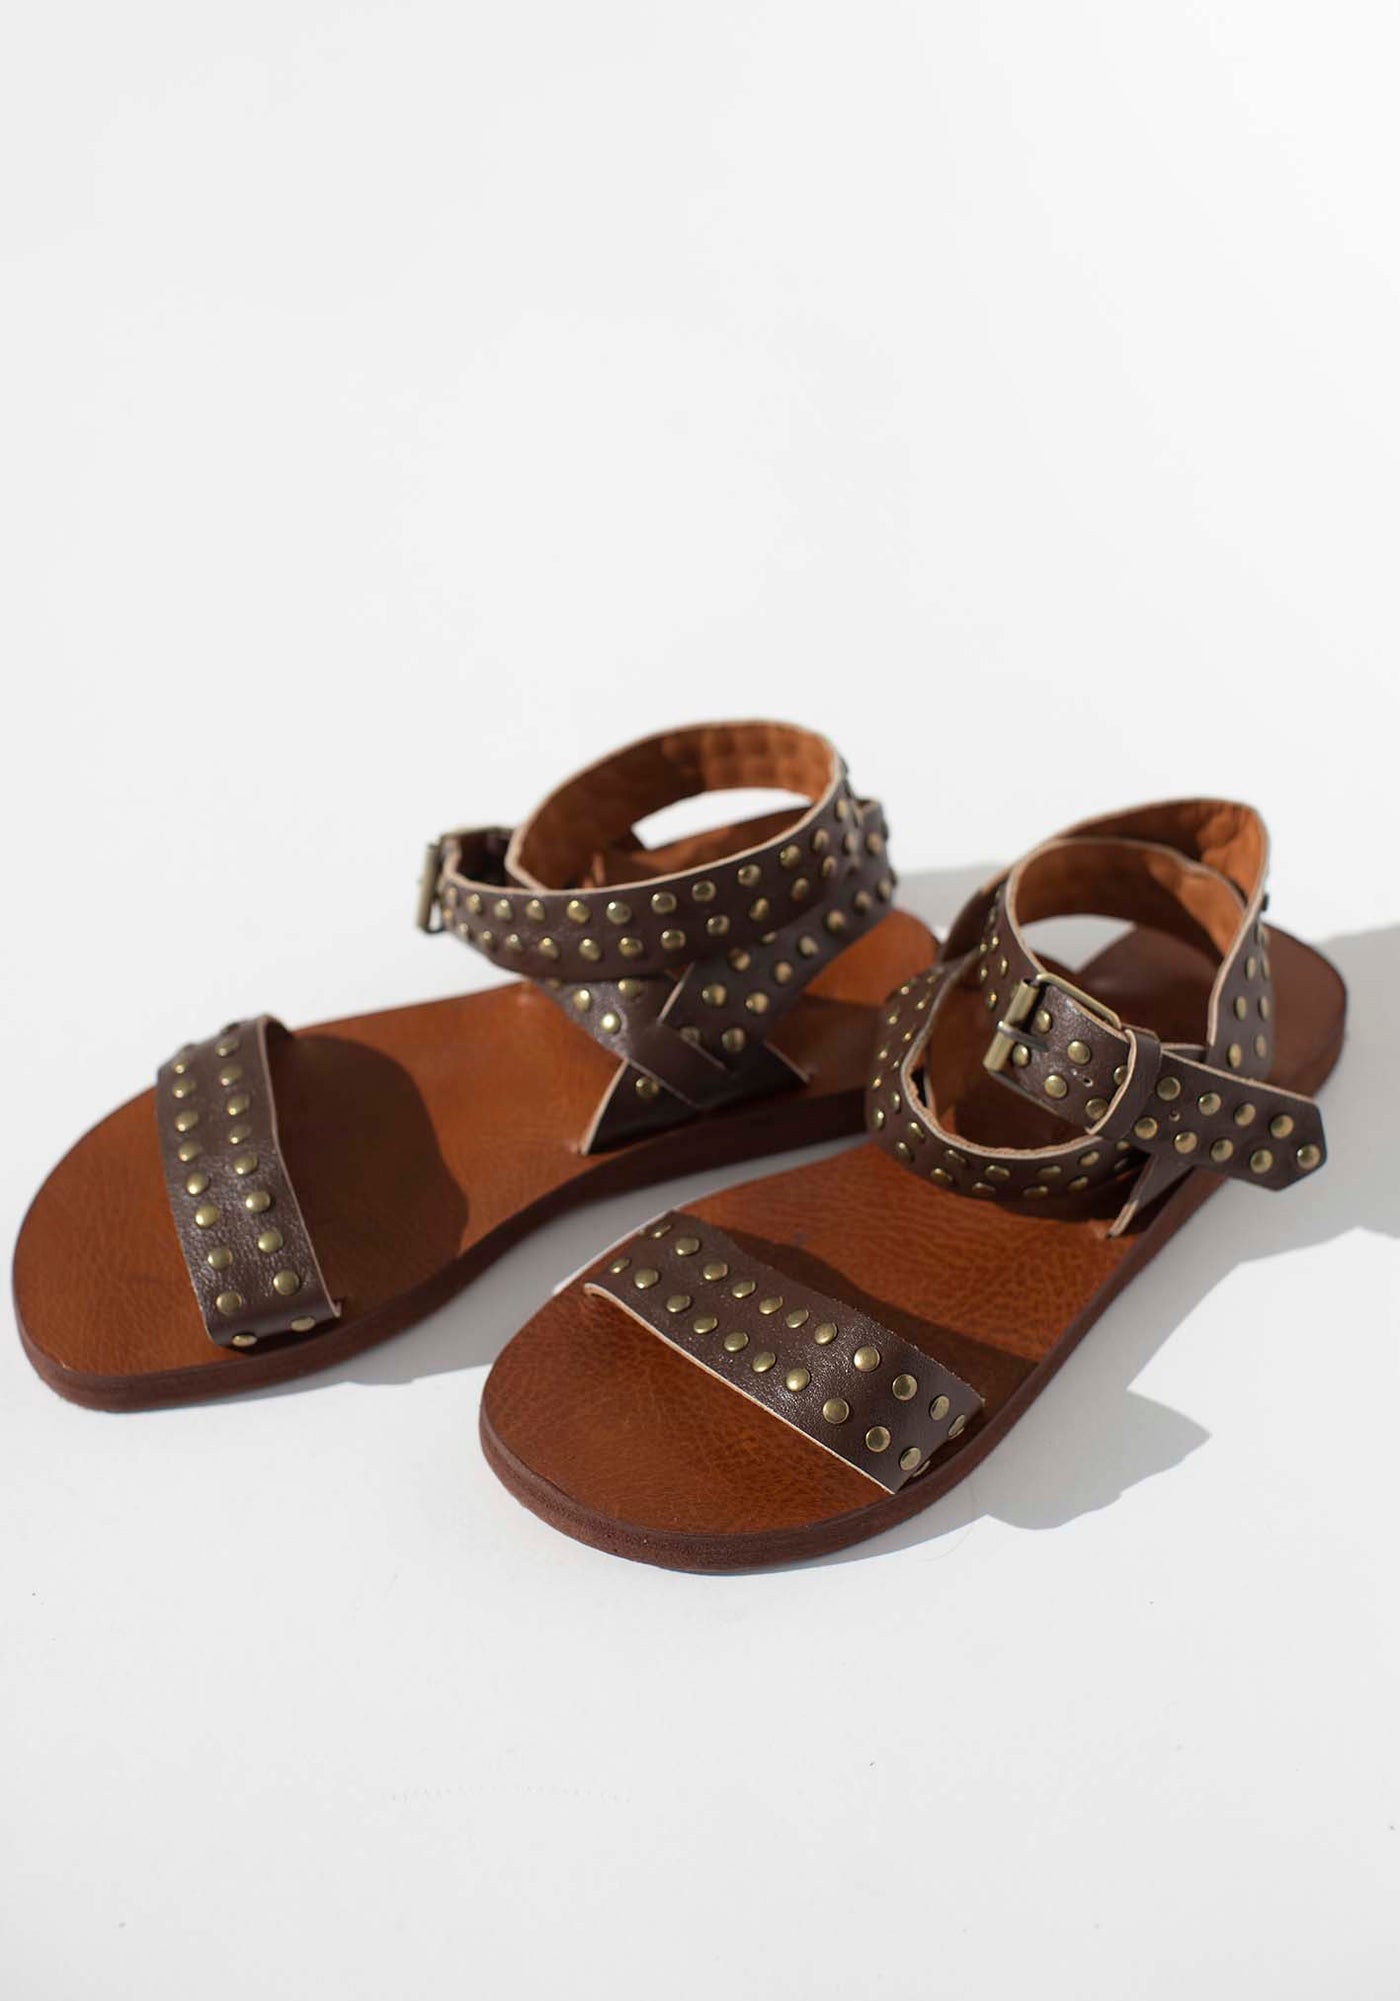 Nomad Brown Leather Sandal